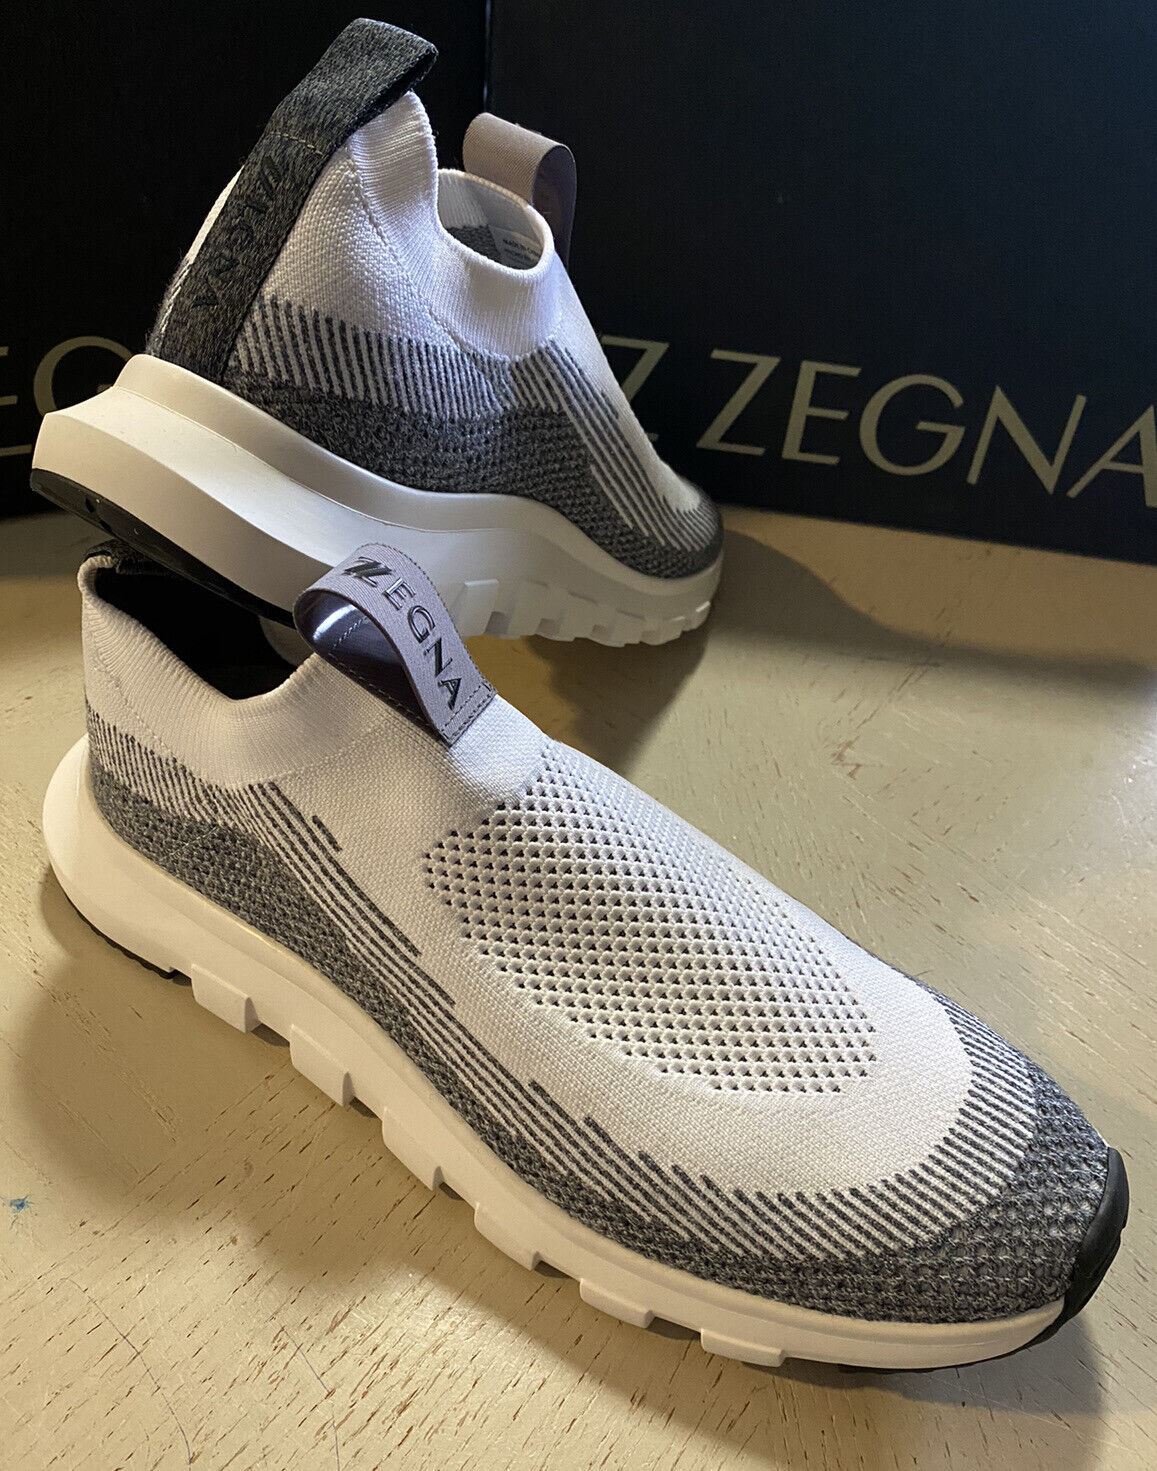 Neu $495 Z Zegna Herren Sock Runners Sneakers Schuhe Weiß/Grau 12,5 US/45,5 Eu